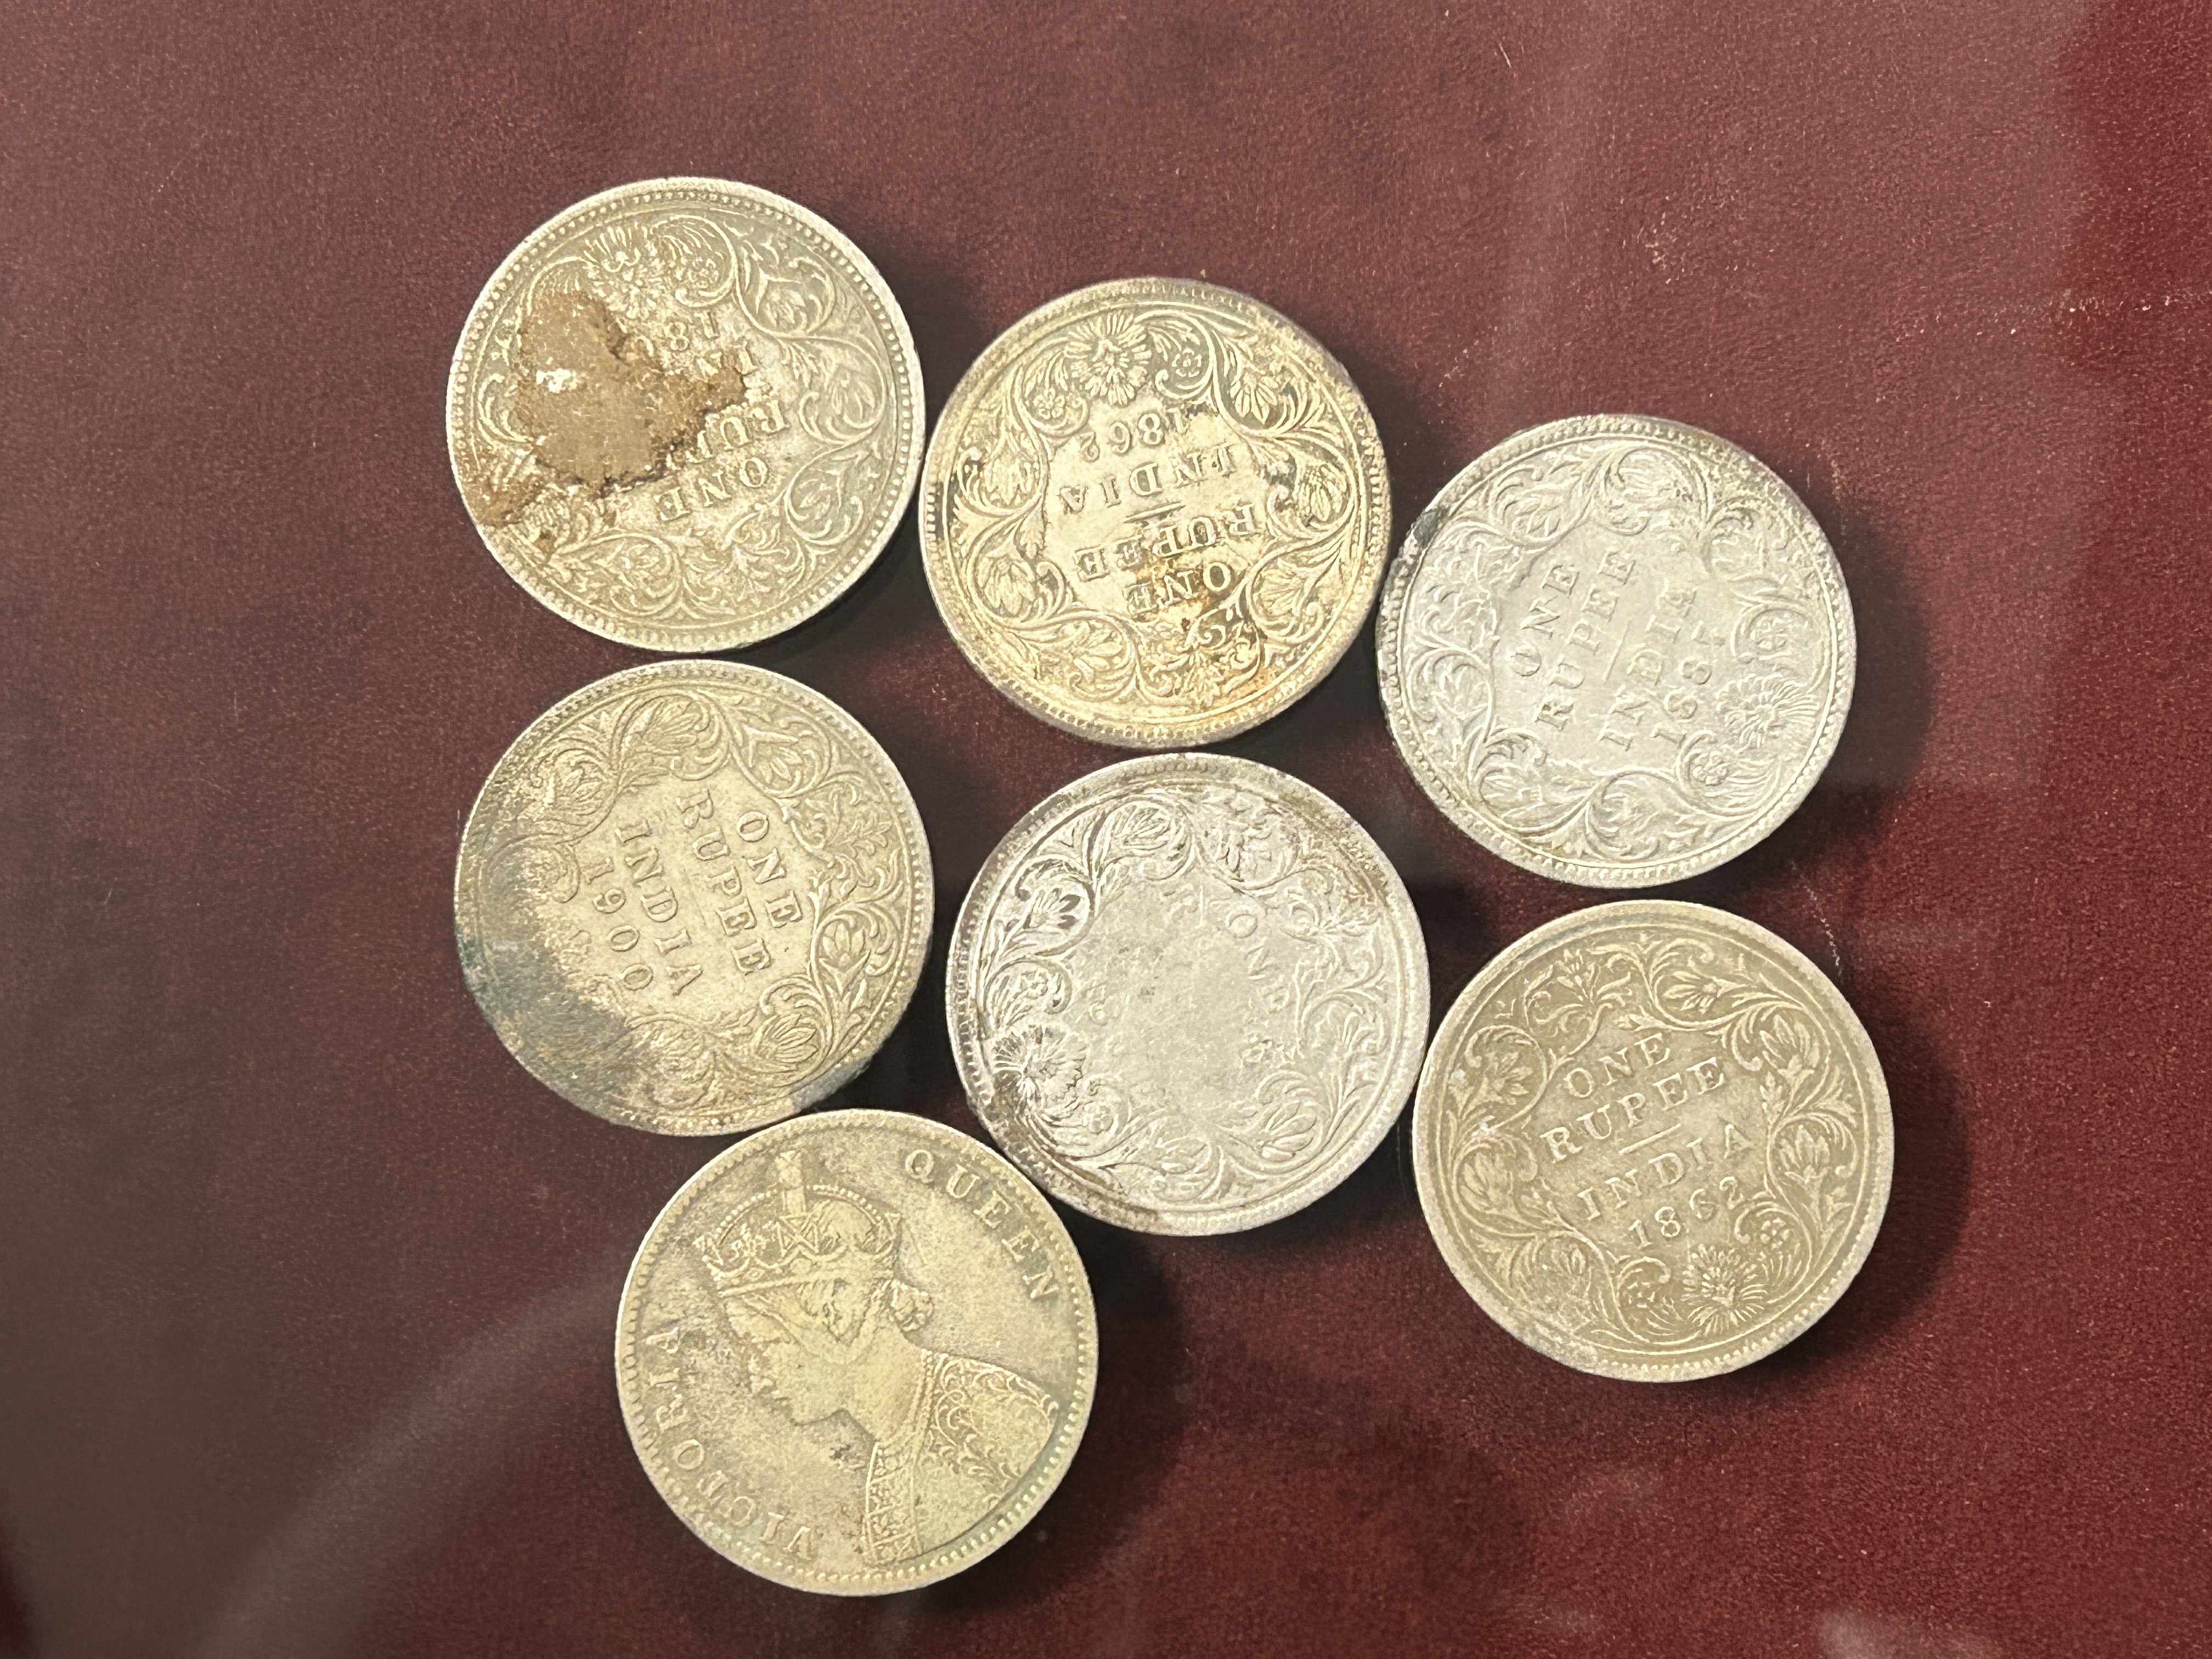 British Era Silver Coins Unearthed in Madhya Pradesh's Gwalior